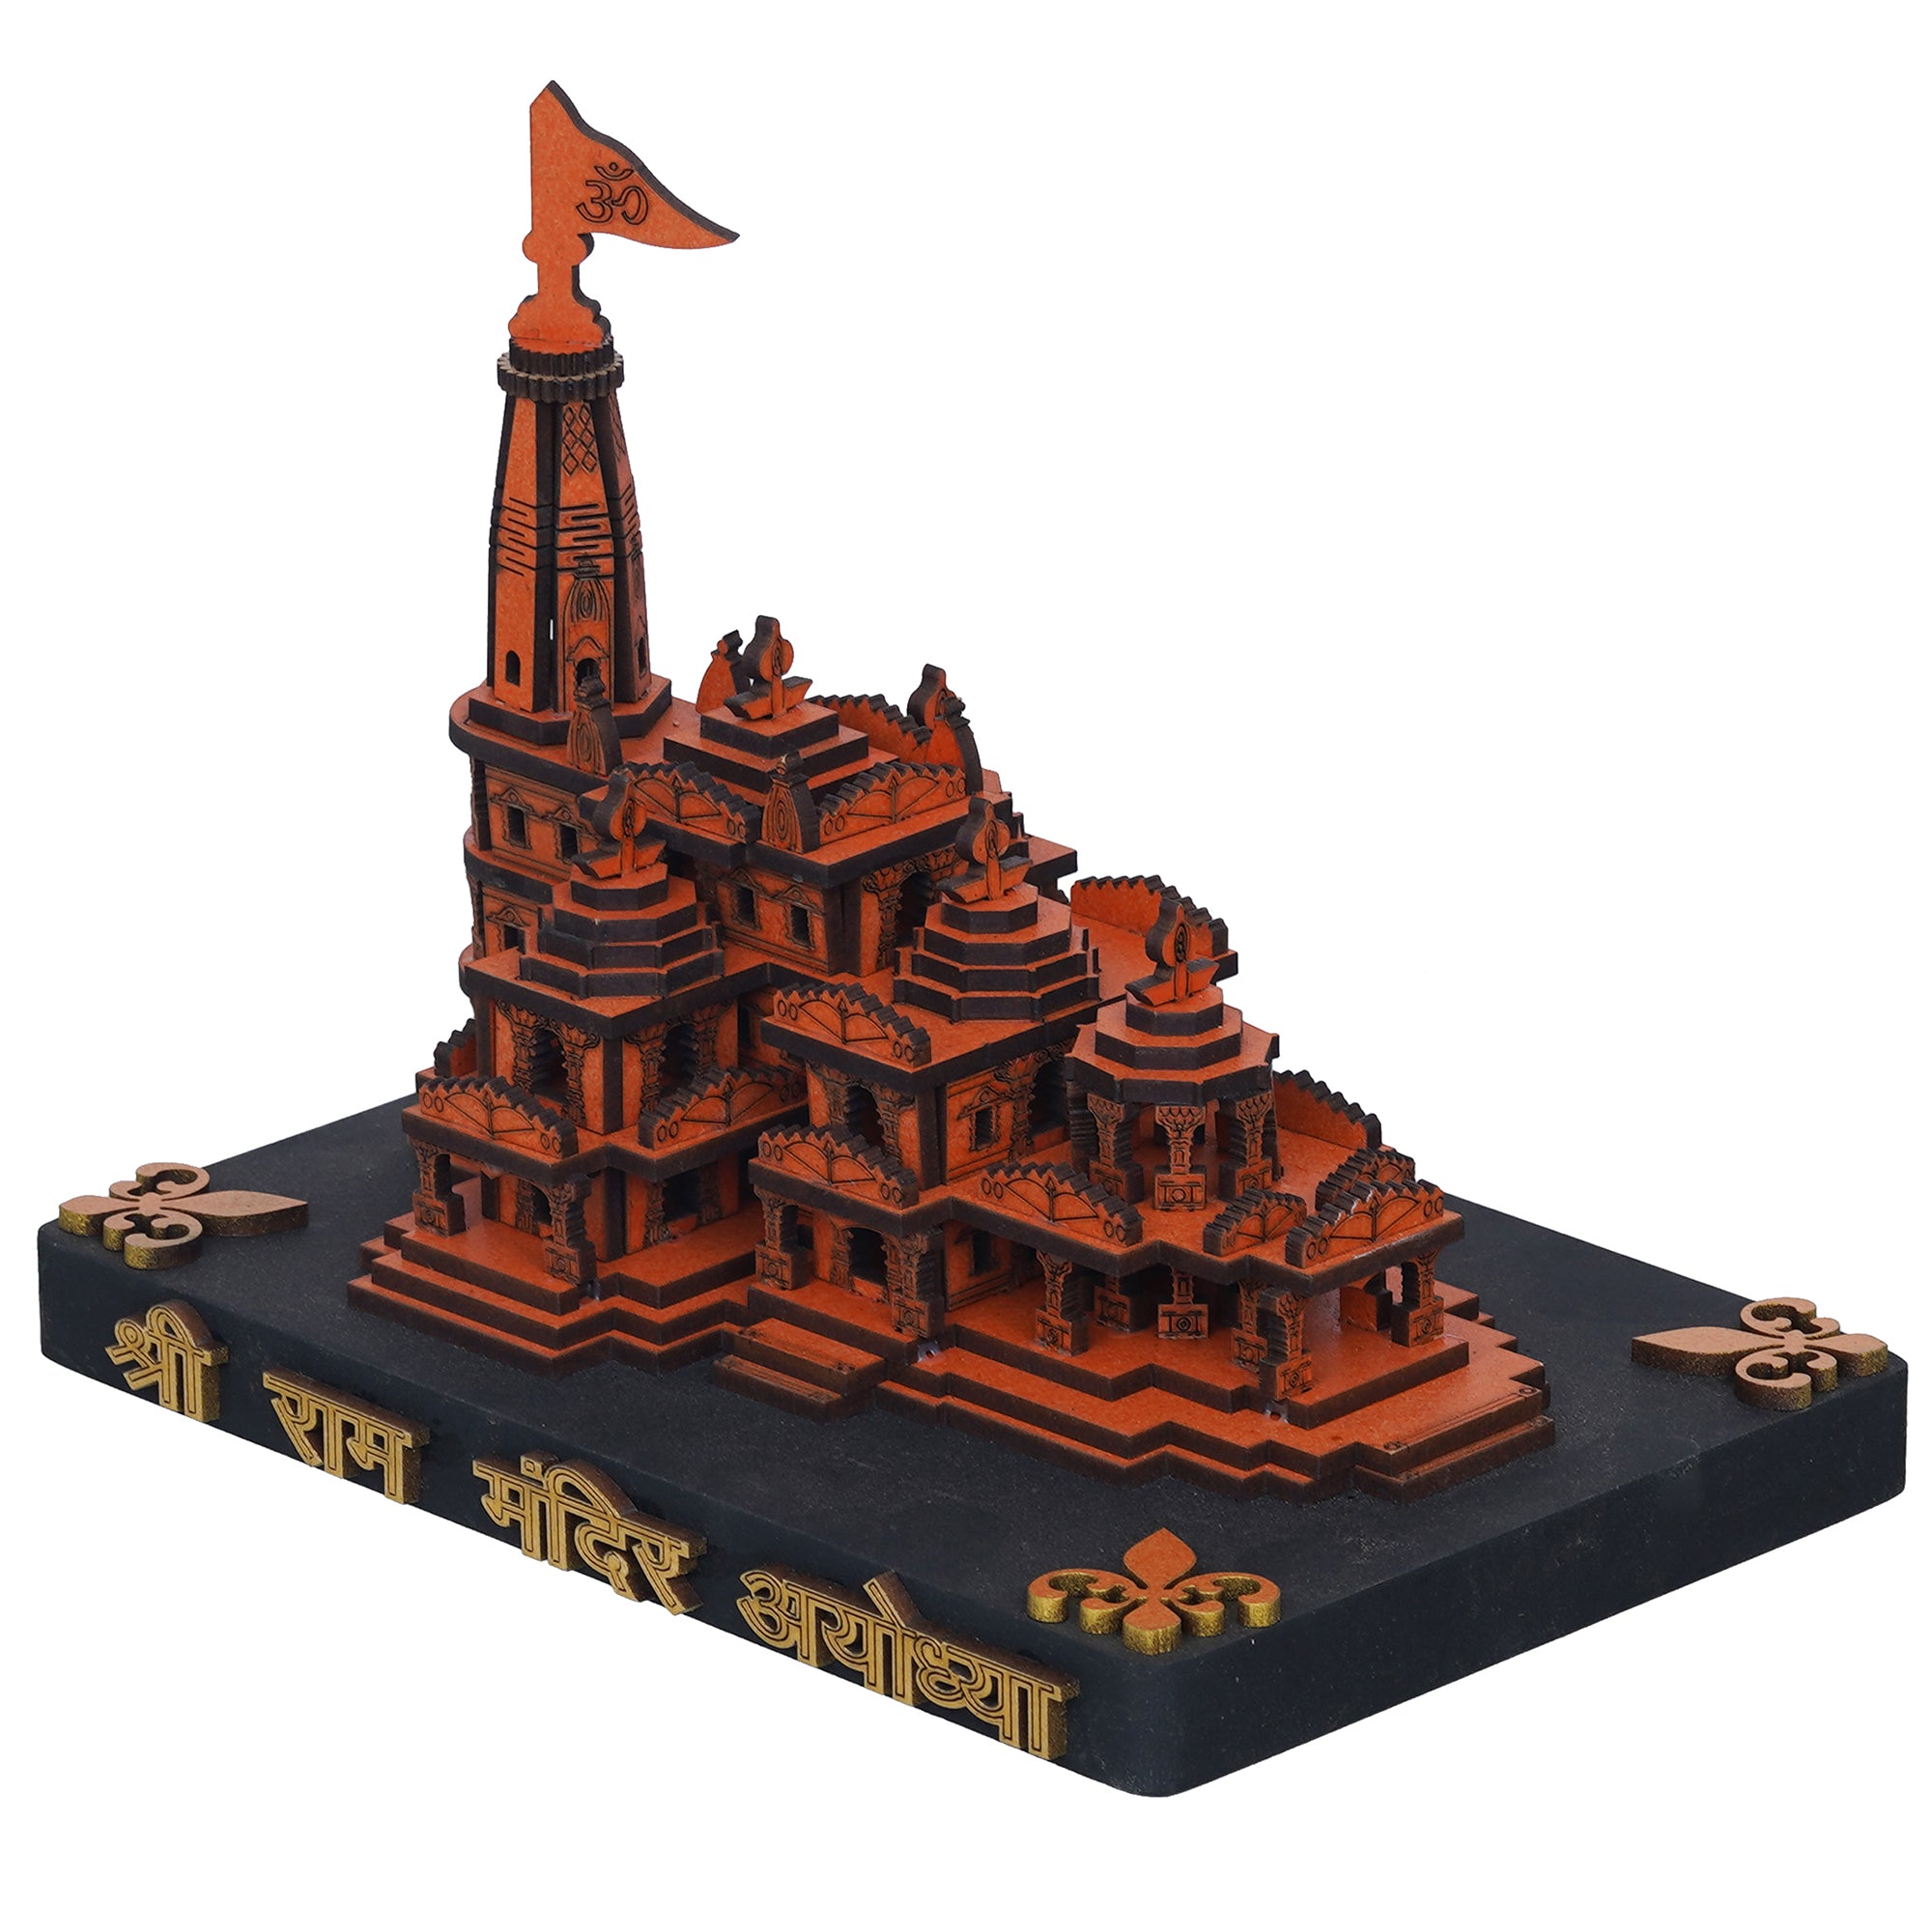 eCraftIndia Shri Ram Mandir Ayodhya Model - Wooden MDF Craftsmanship Authentic Designer Temple - Ideal for Home Temple, Decor, and Spiritual Gifting (Orange, Gold) 2